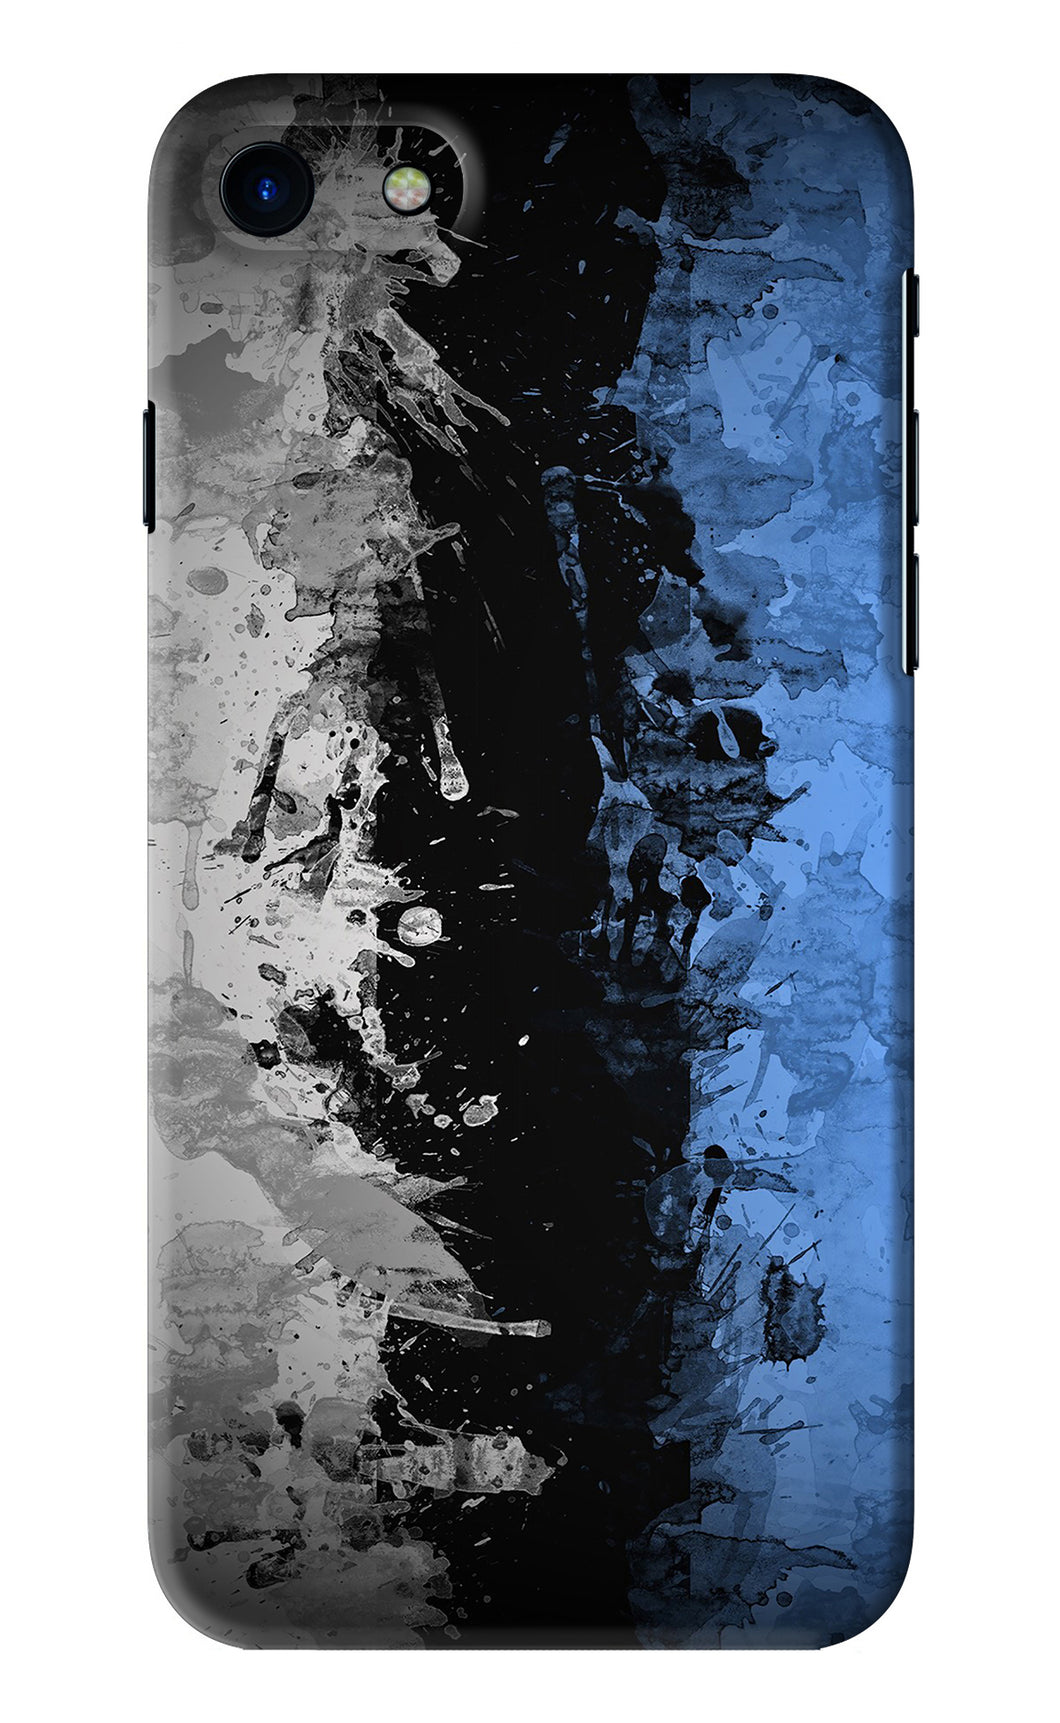 Artistic Design iPhone 8 Back Skin Wrap